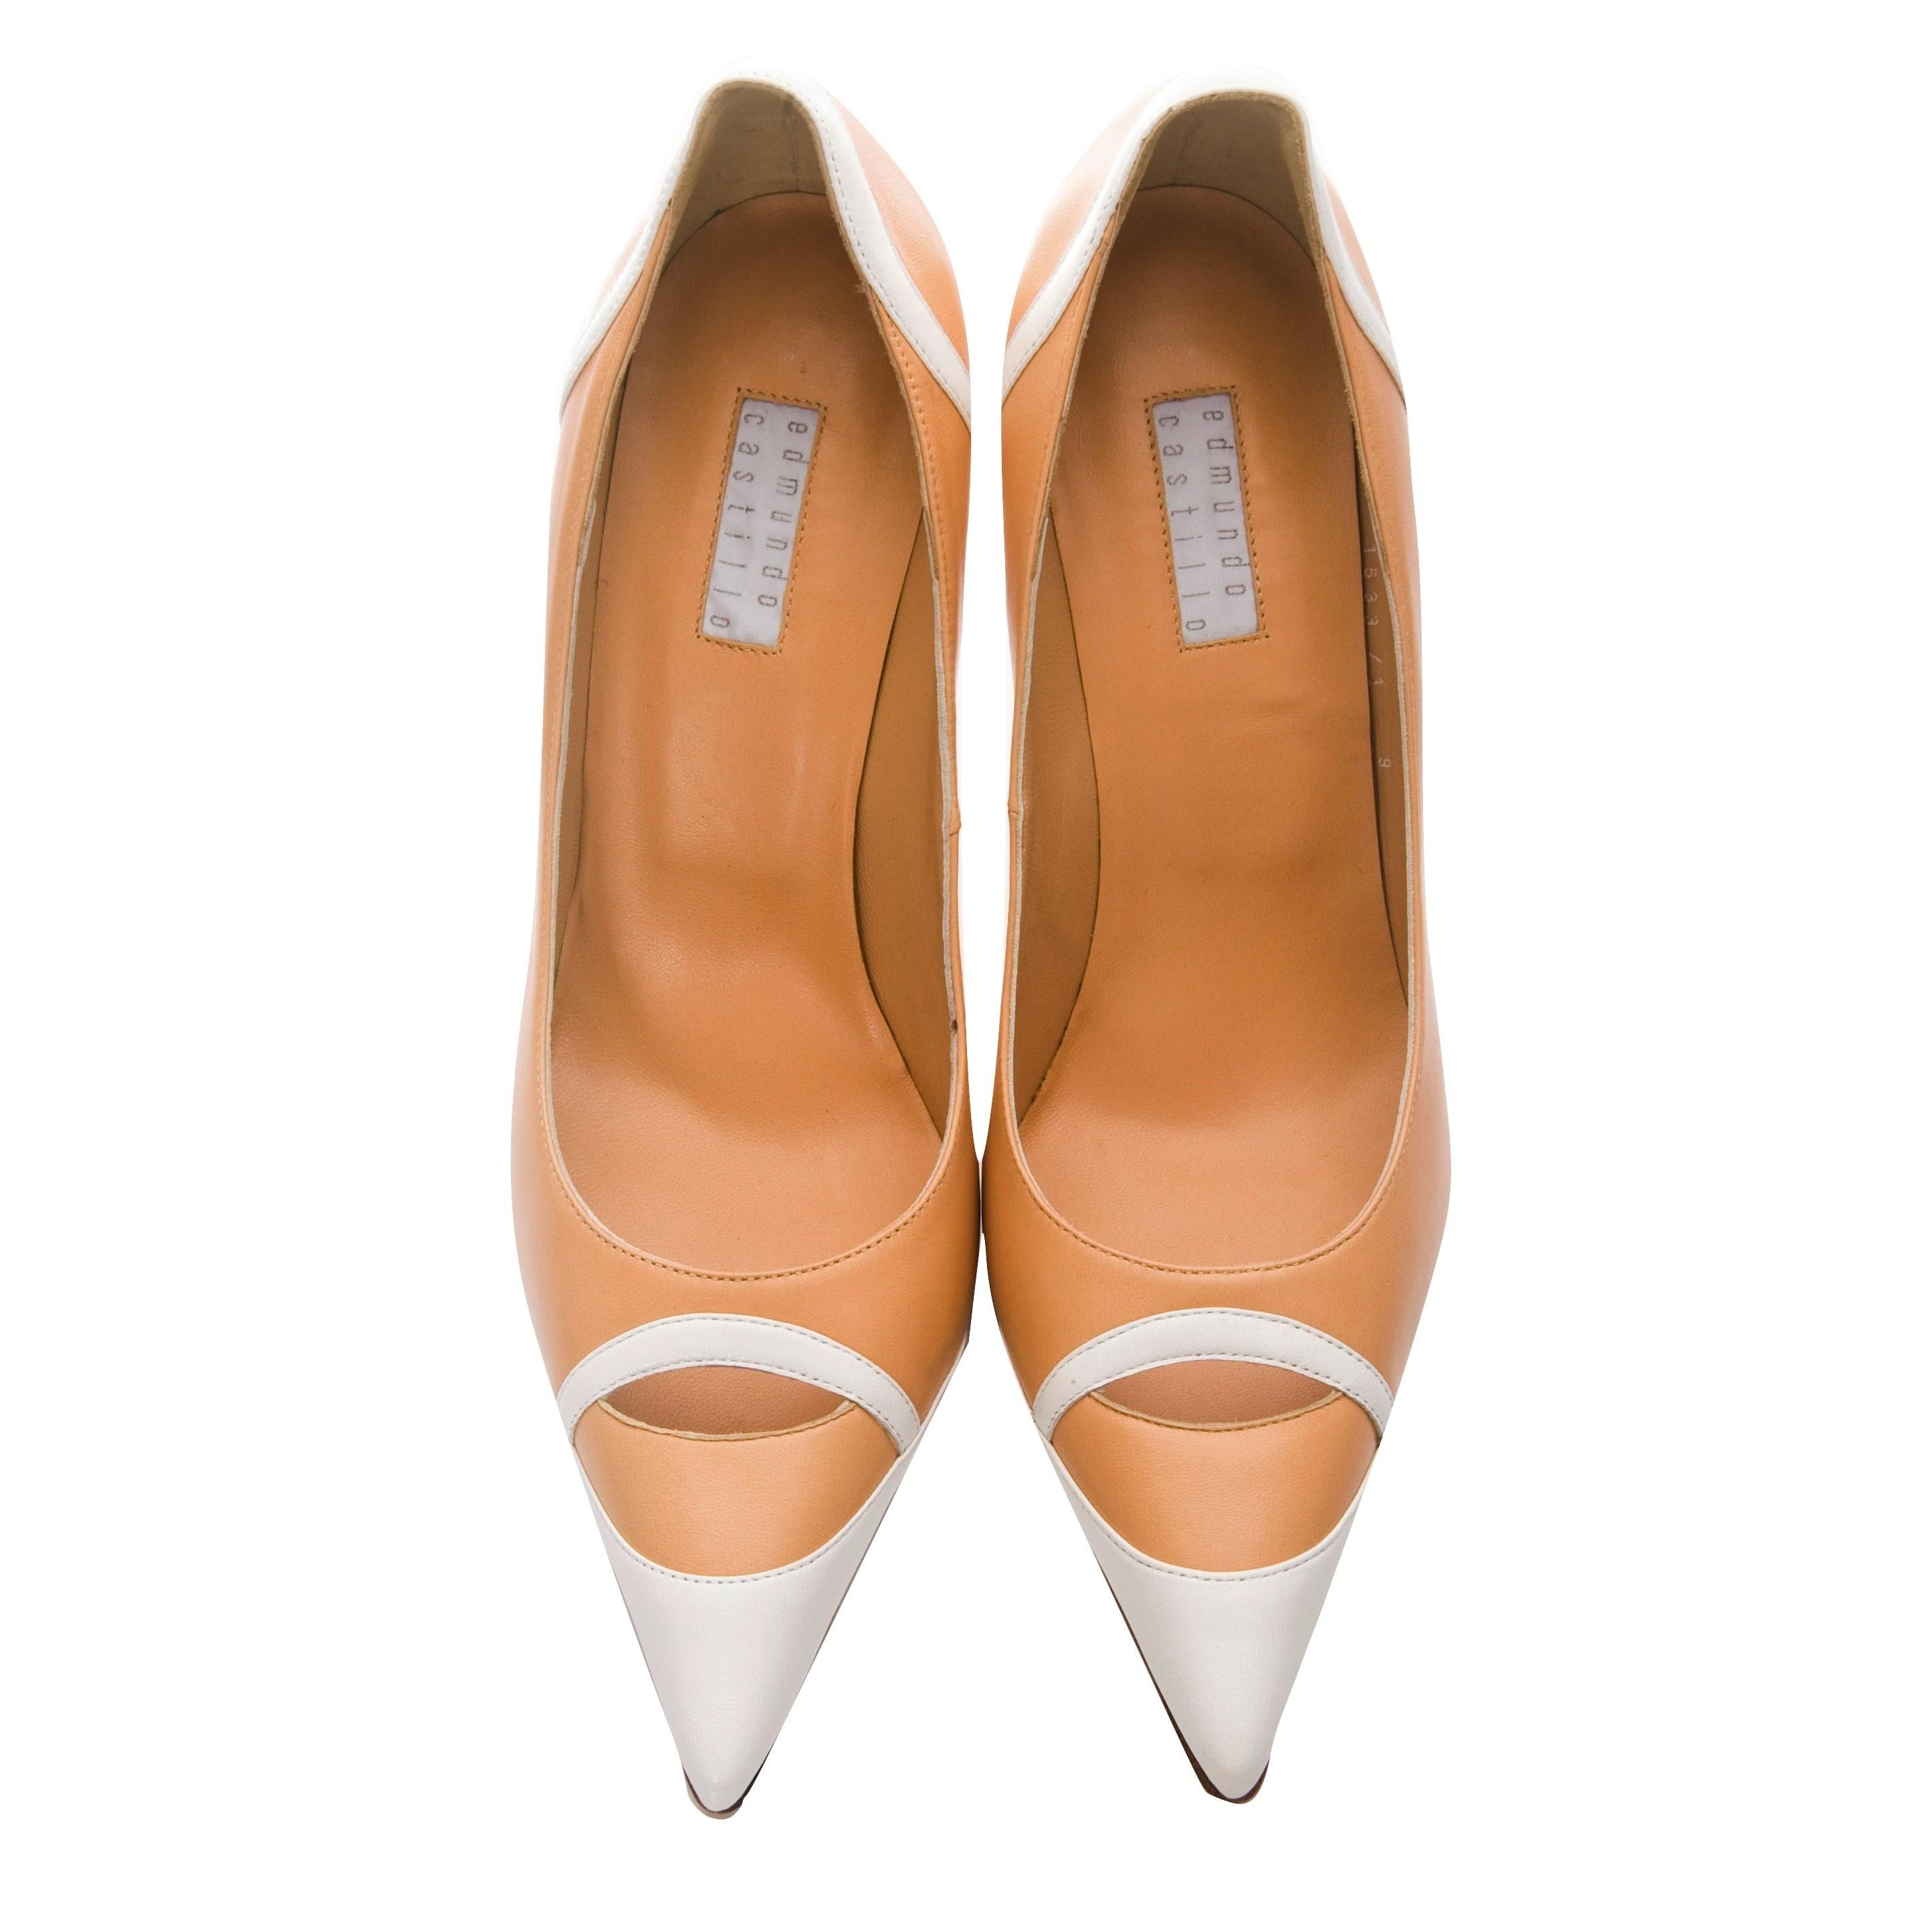 peach pumps heels